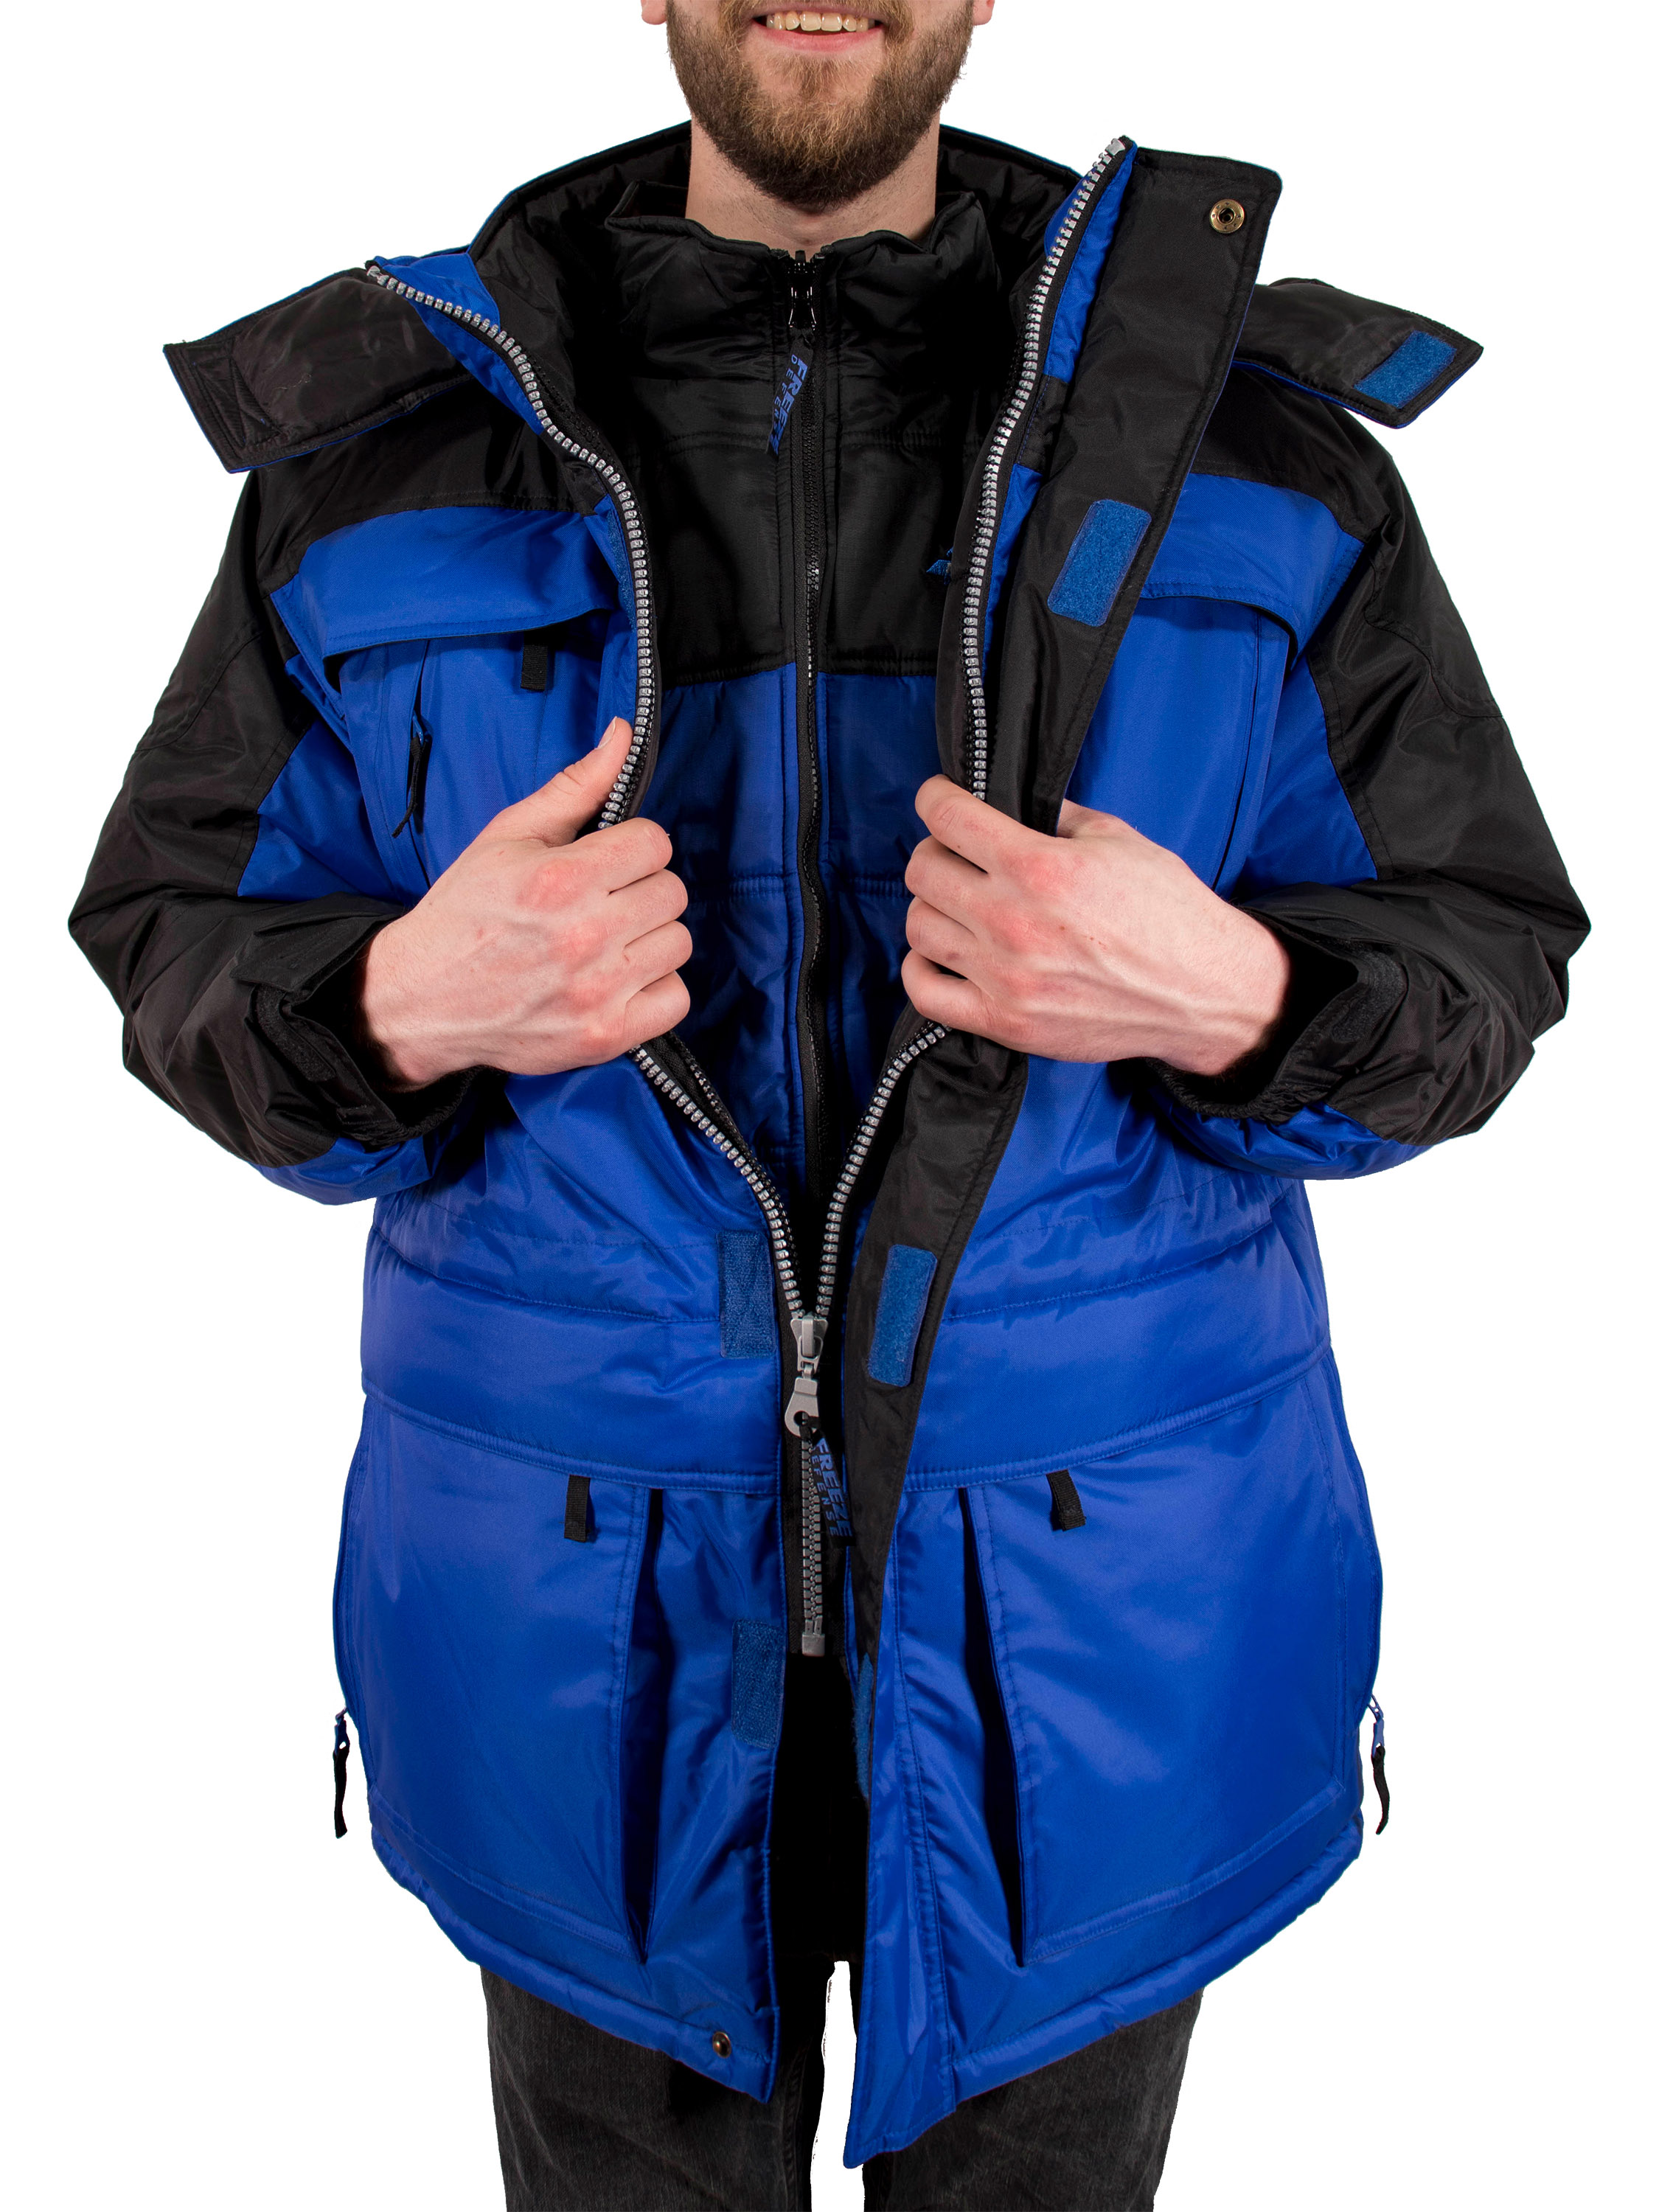 Freeze Defense Warm Men's 3in1 Winter Jacket Coat Parka & Vest (Small, Blue) - image 4 of 10